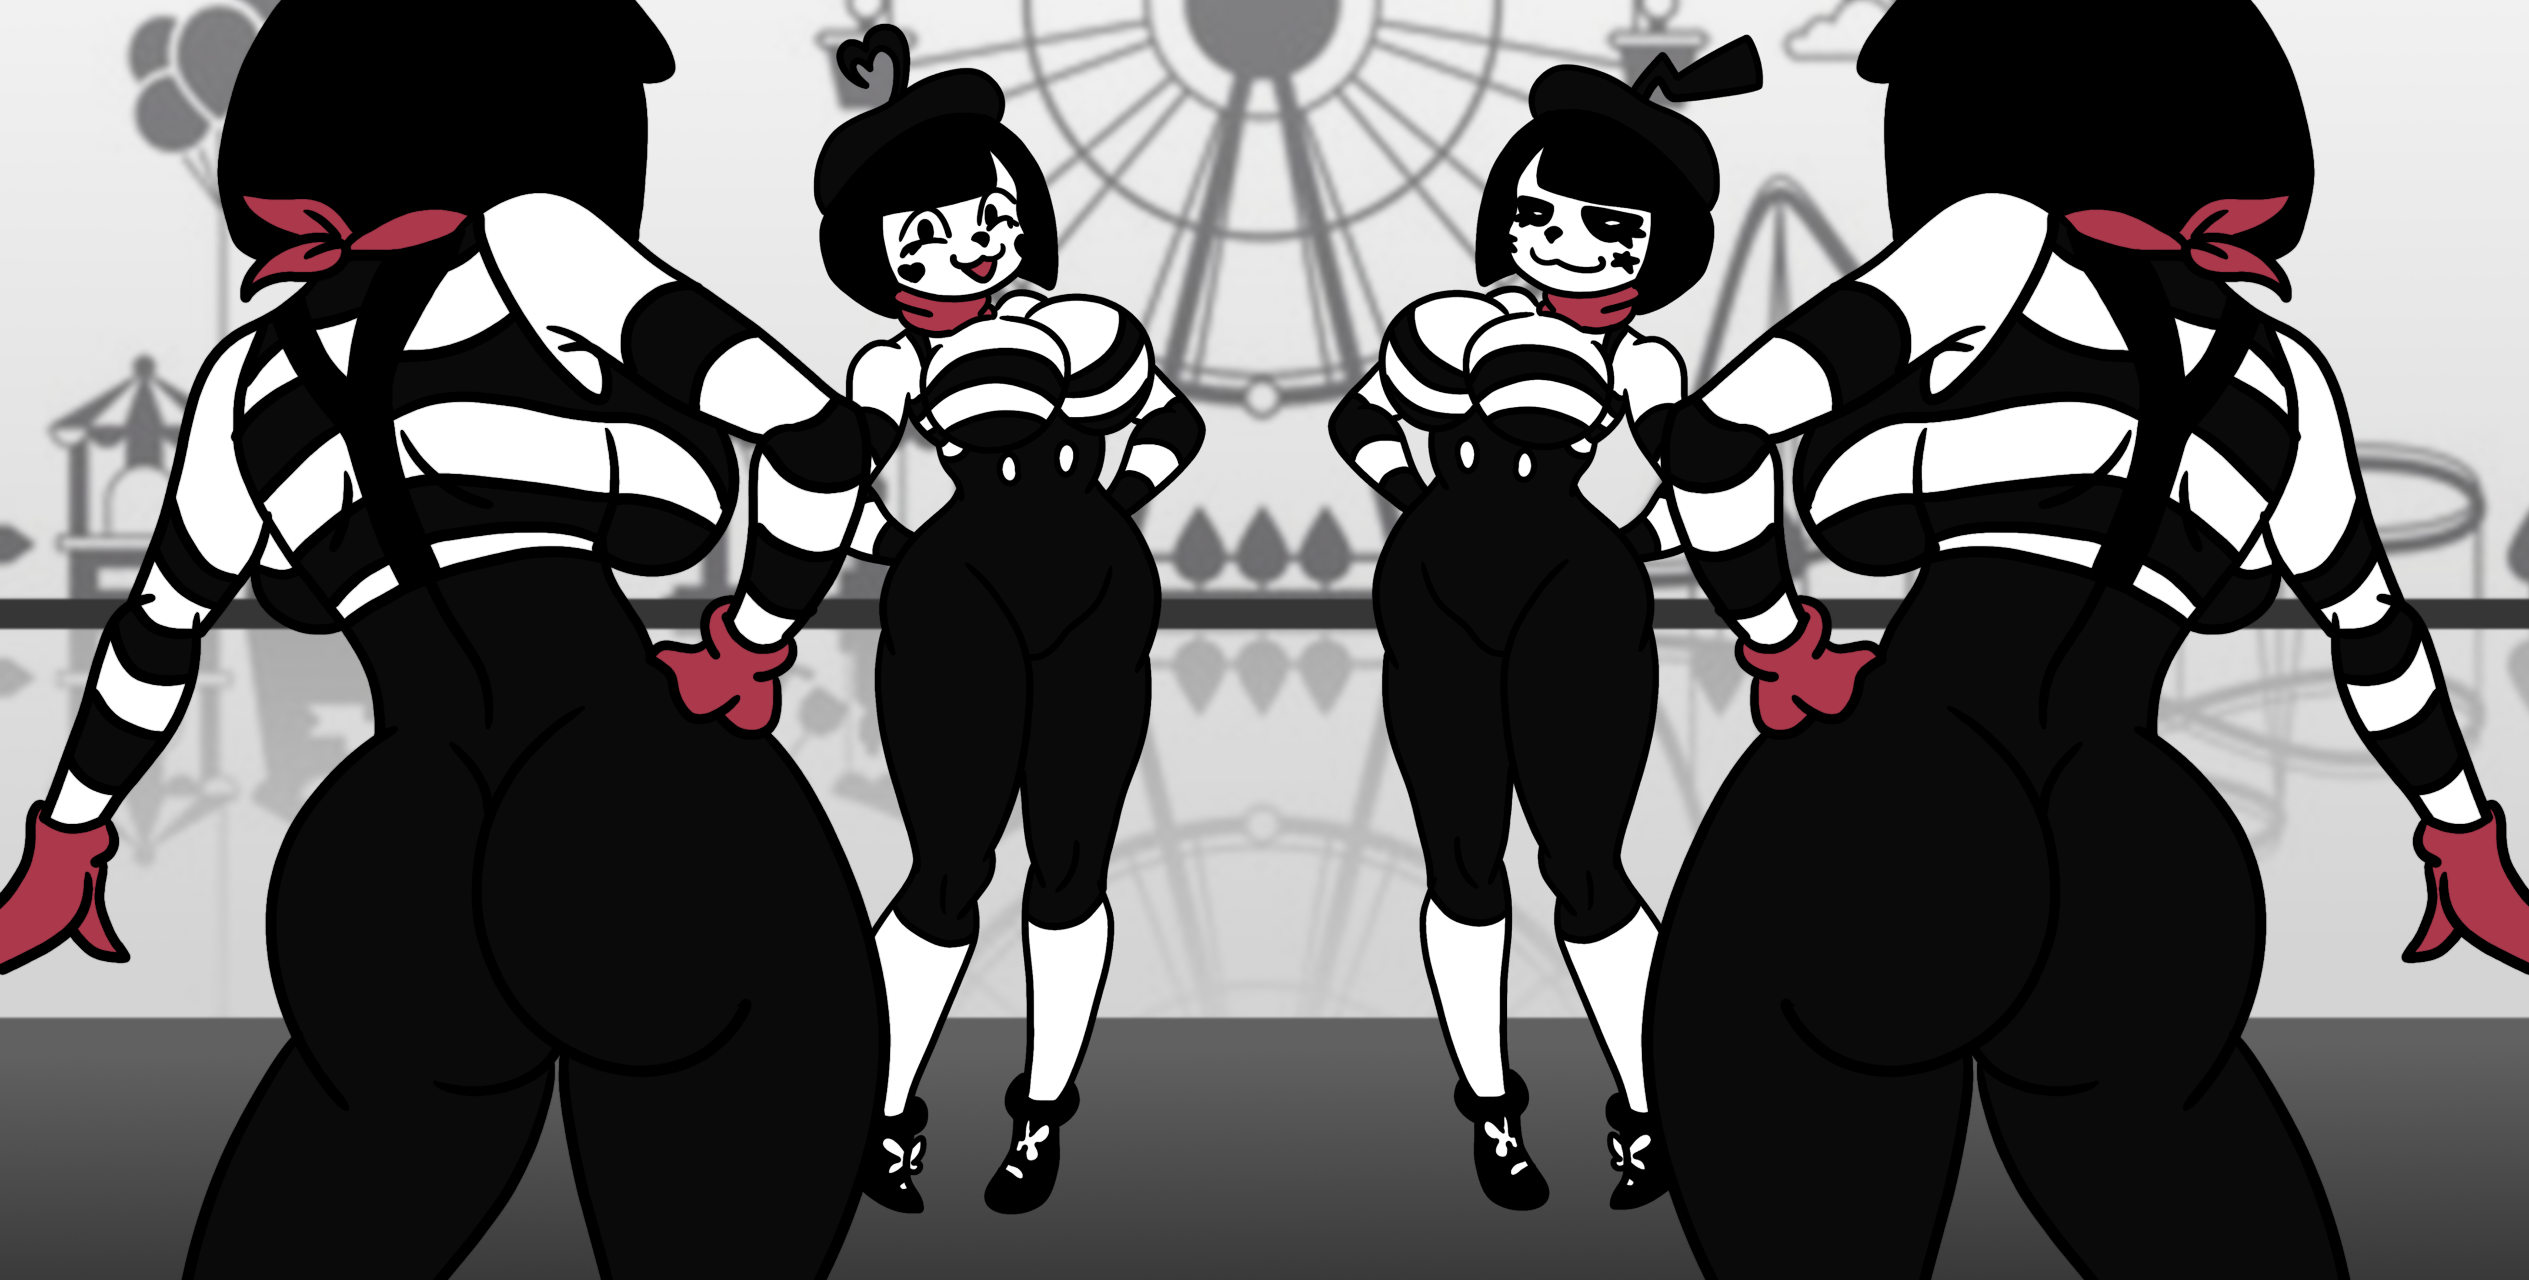 mime and dash : r/animeneckerchief